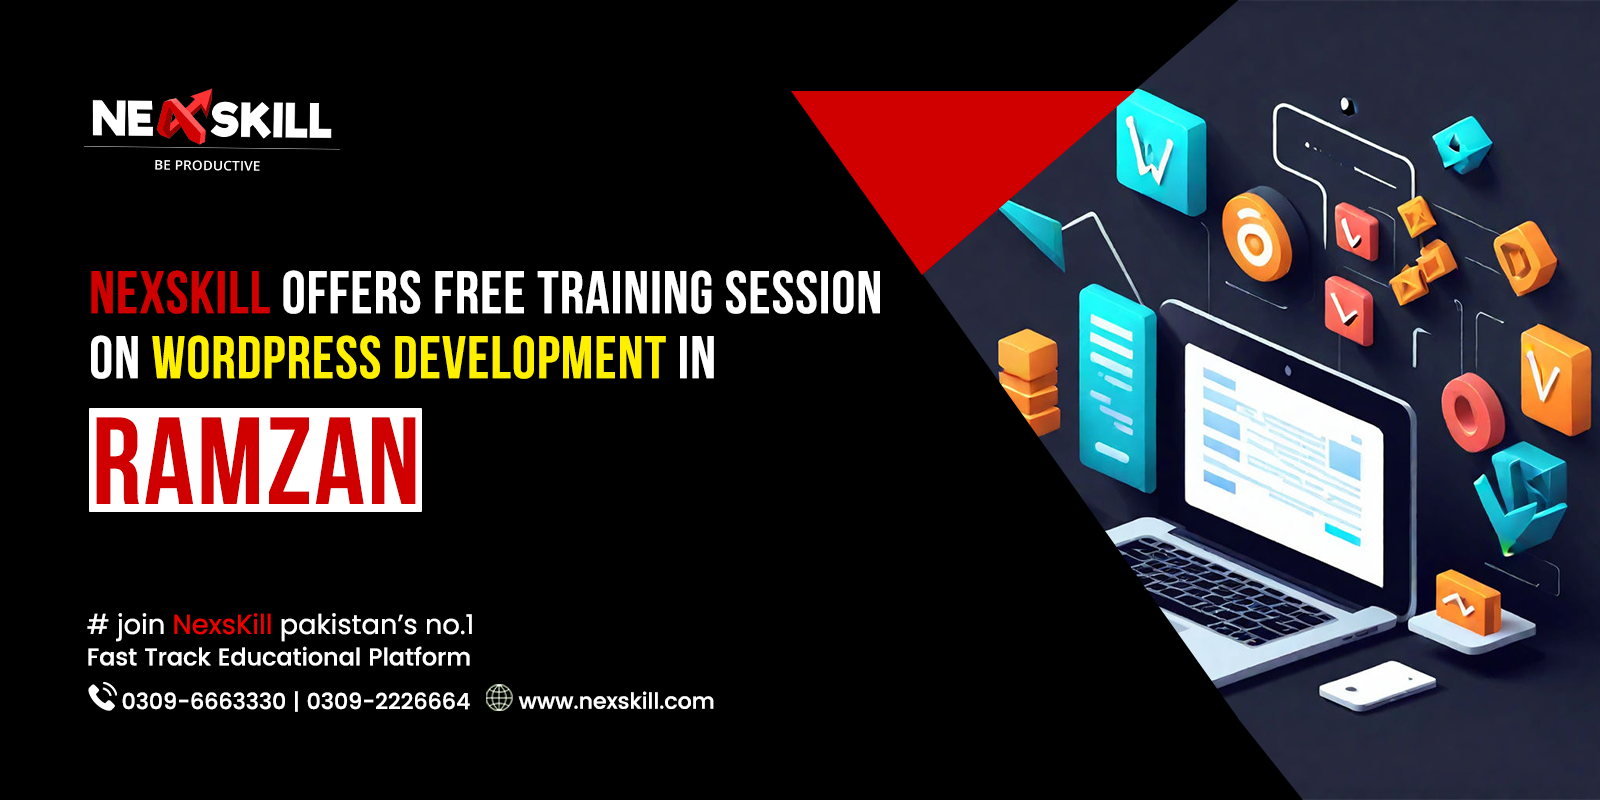 Nexskill Offers Free Training Session on WordPress Development in Ramzan